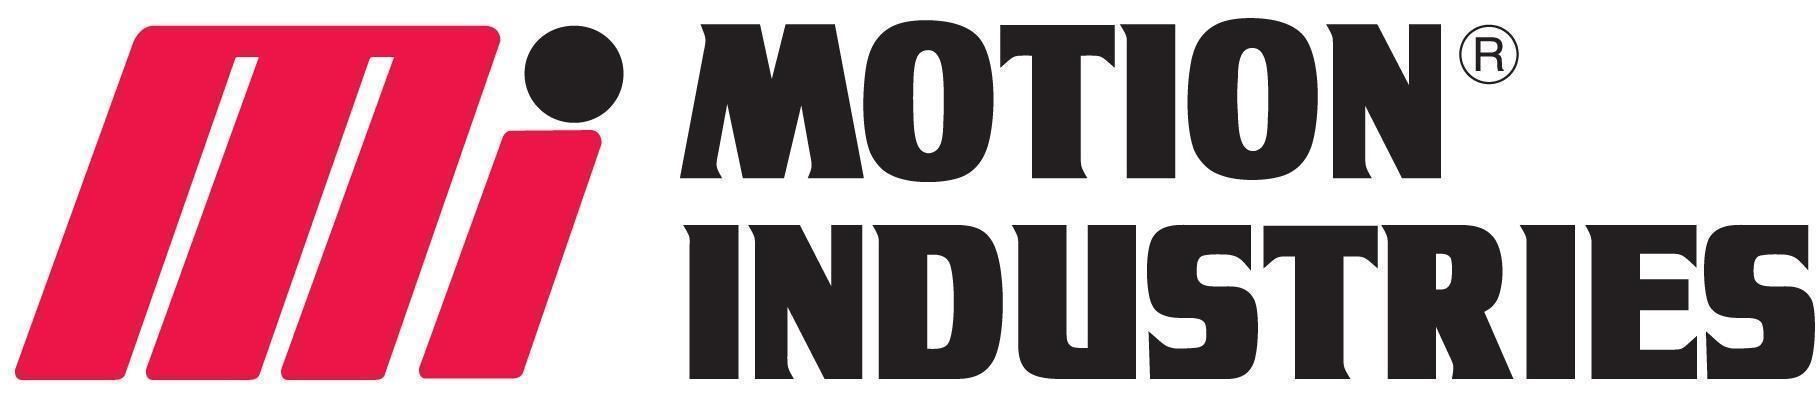 Motion Industries Brand Logo